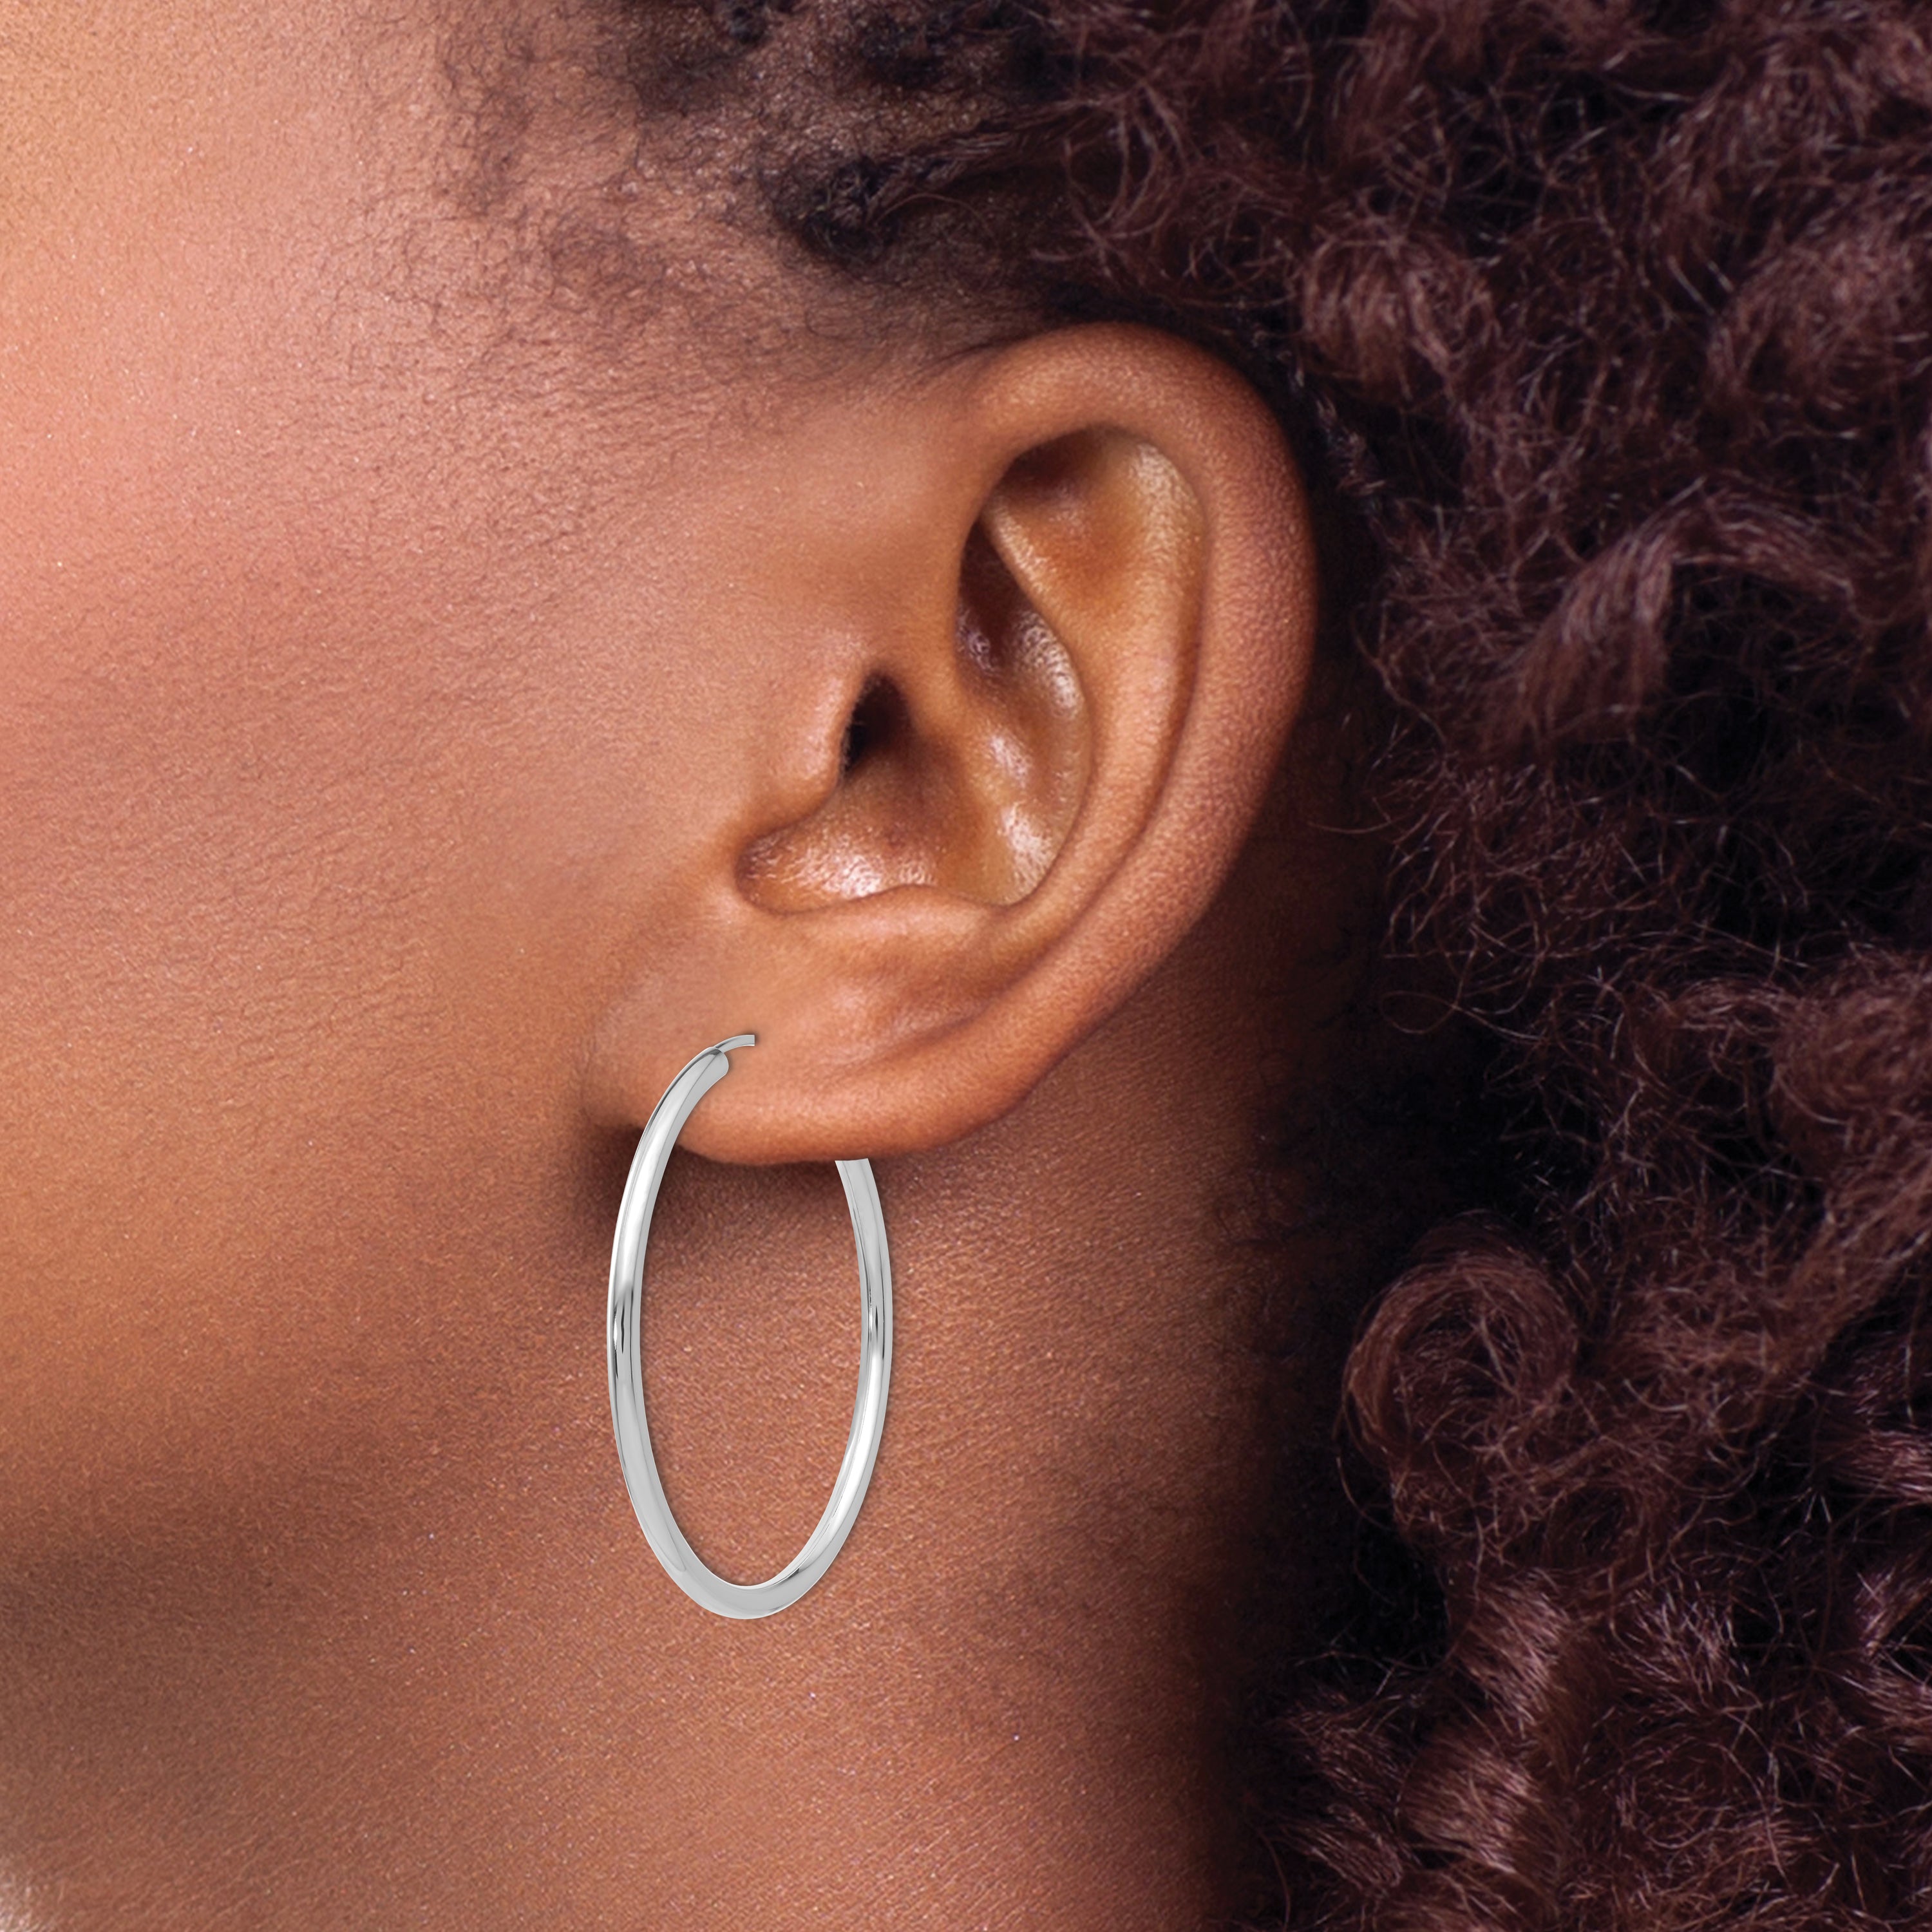 14k White Gold Polished Endless 2mm Hoop Earrings